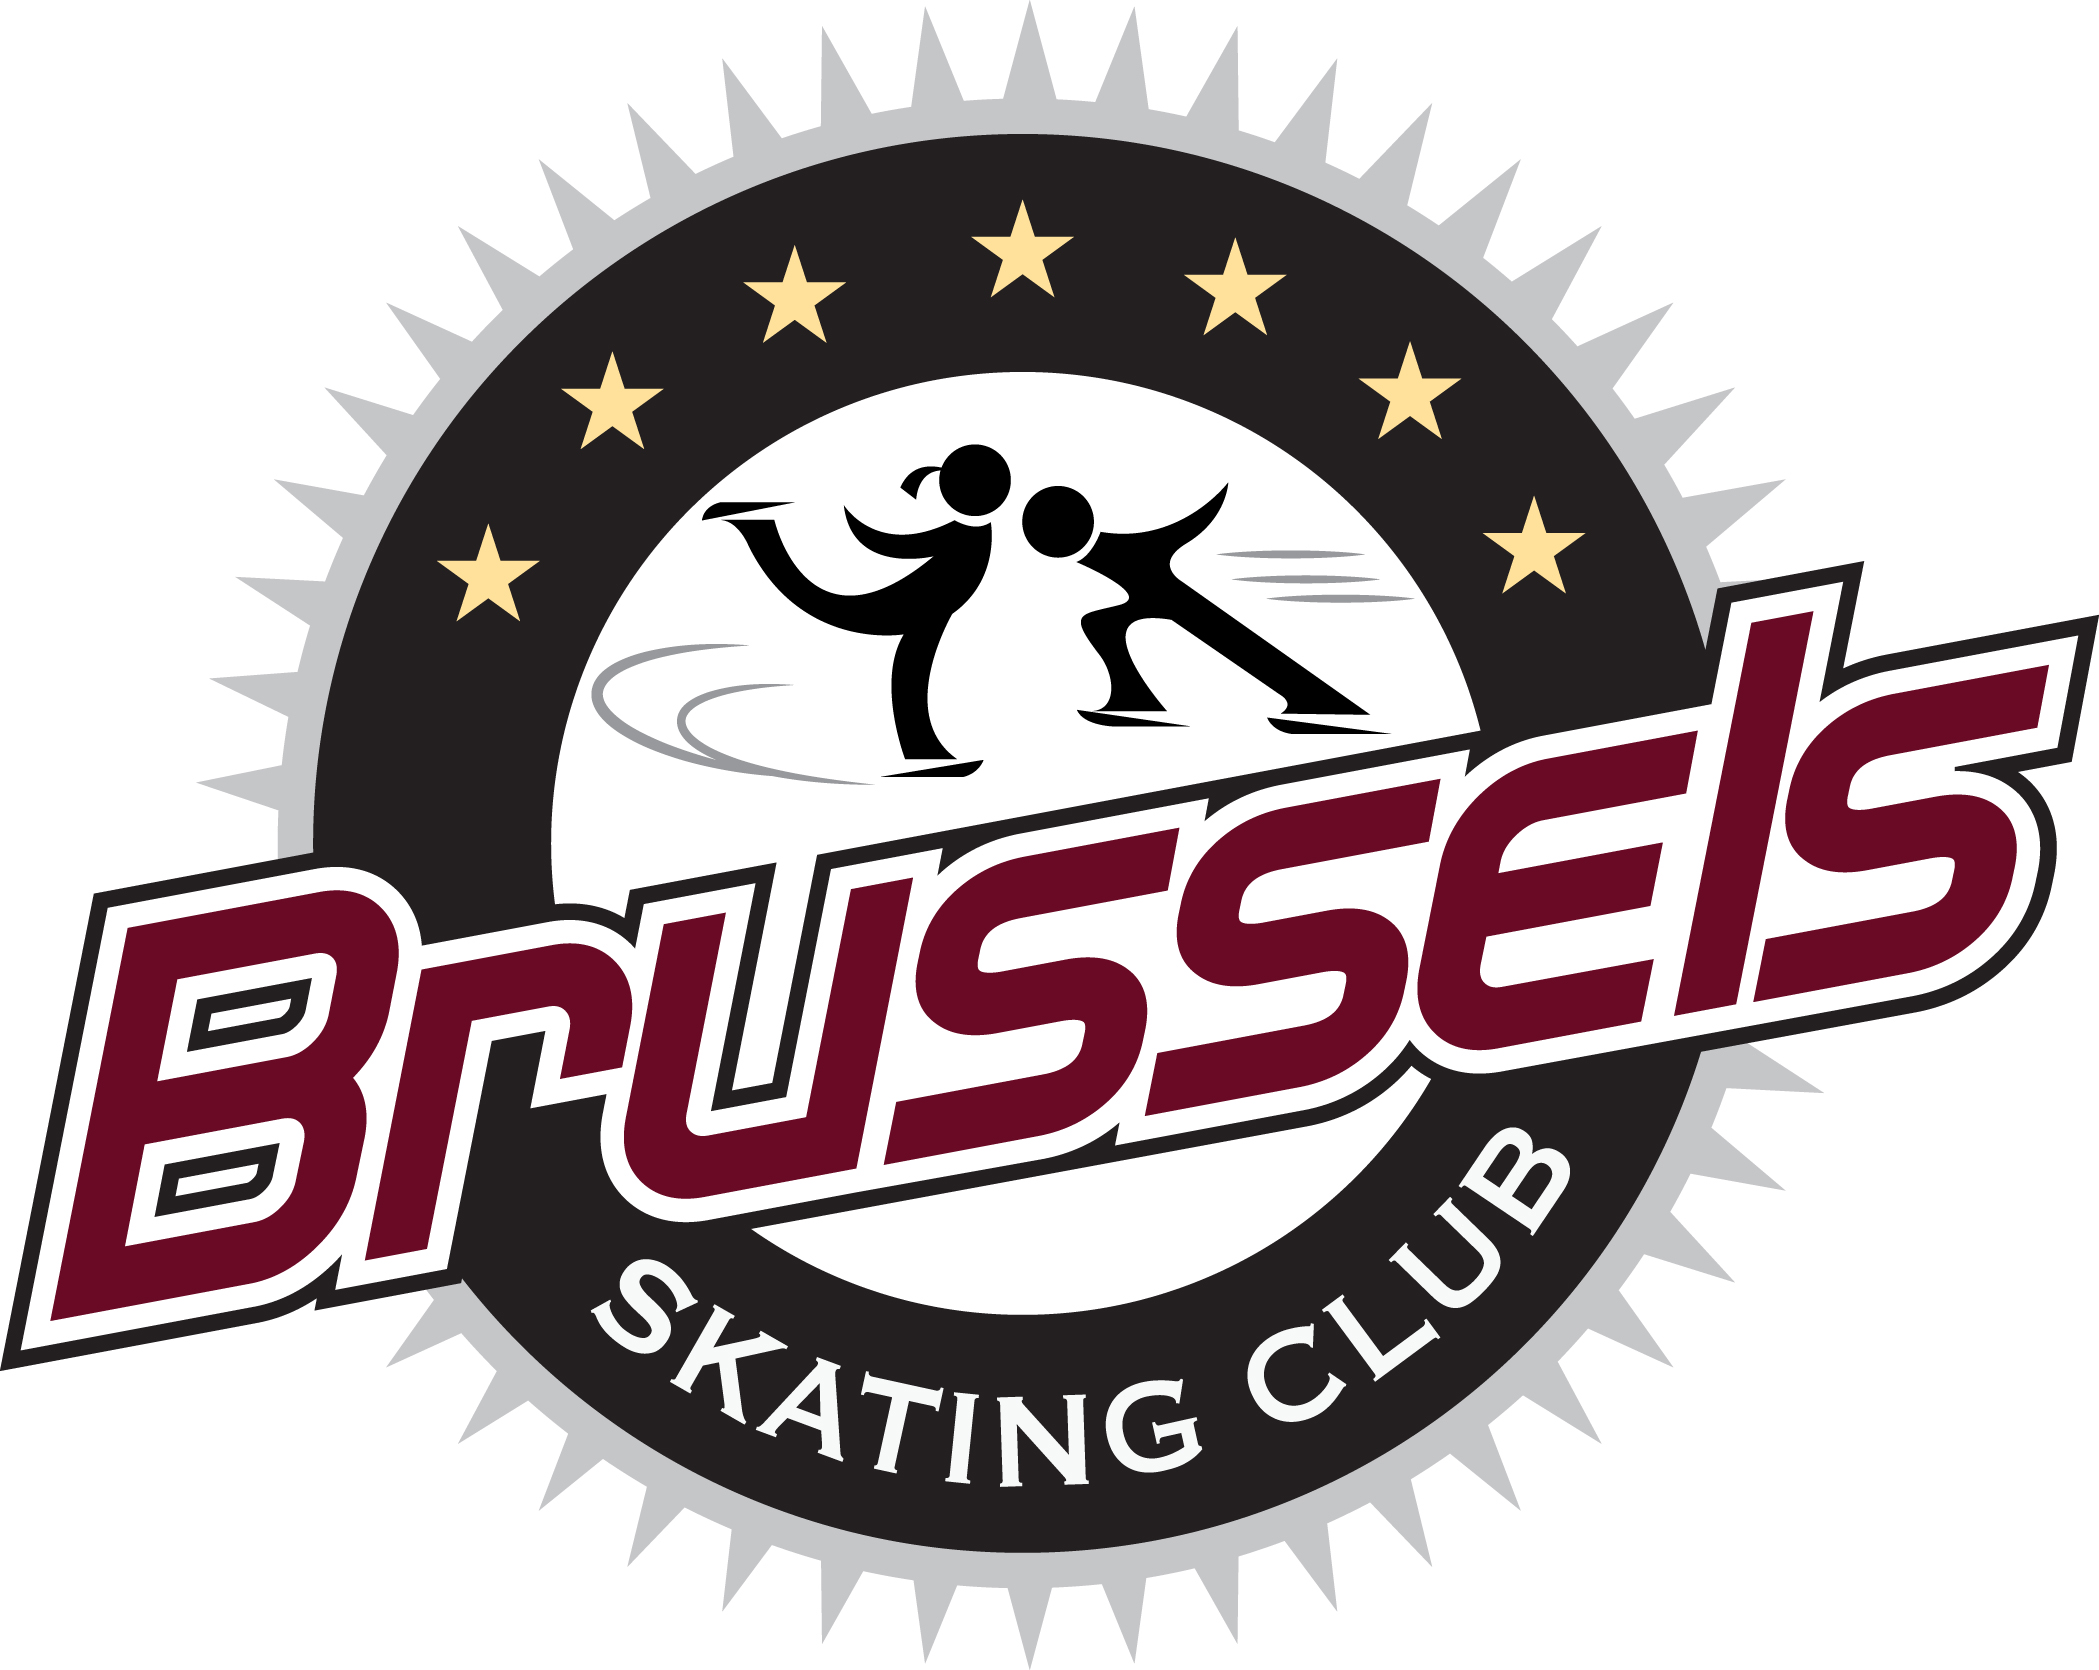 Brussels Skating Club